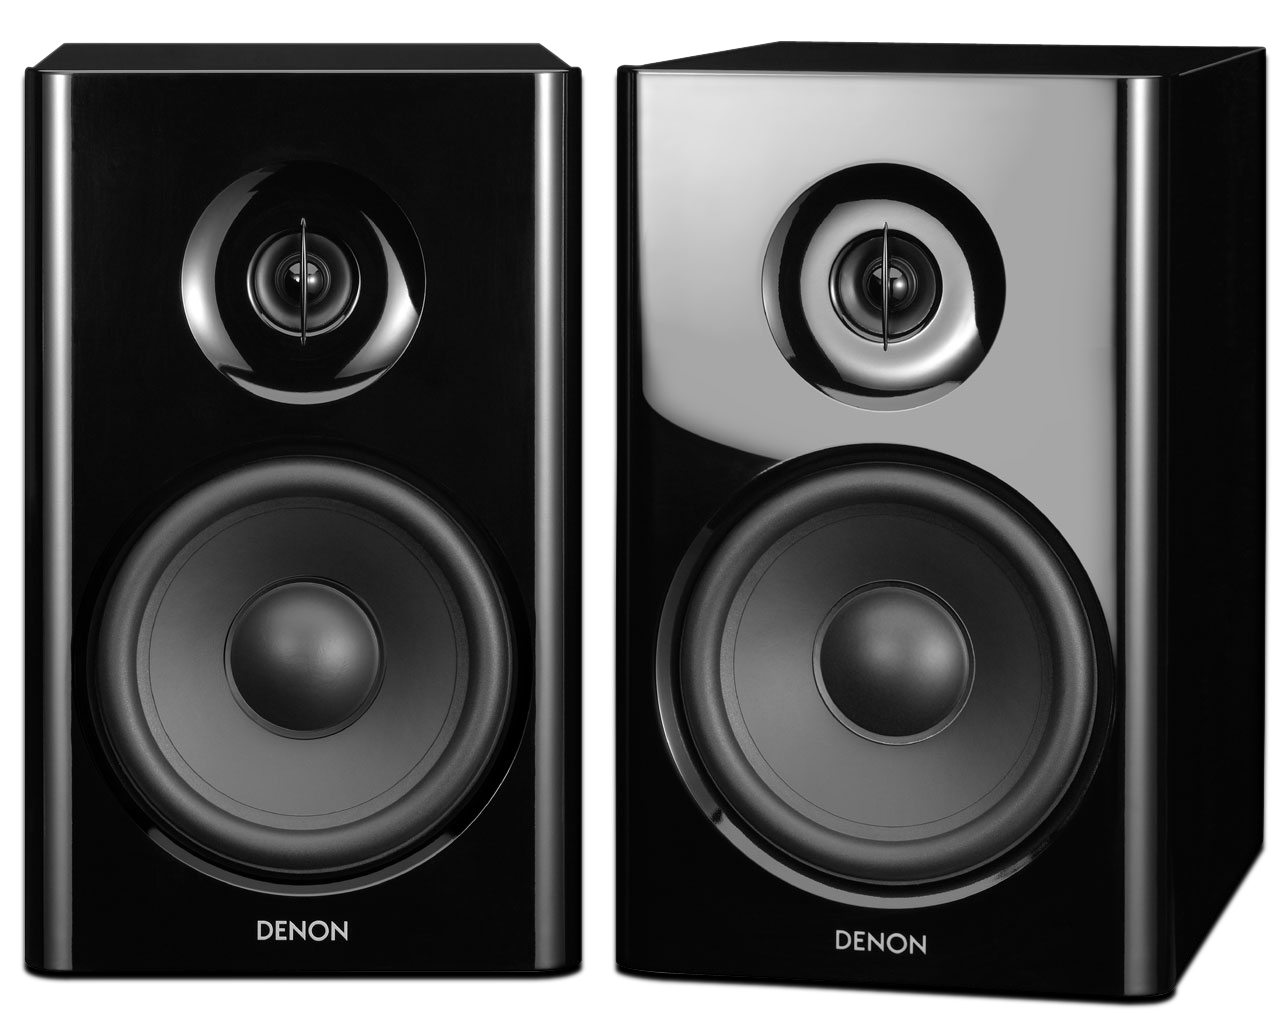 DENON Denon デノン SC-N7 Speaker System スピーカーシステム